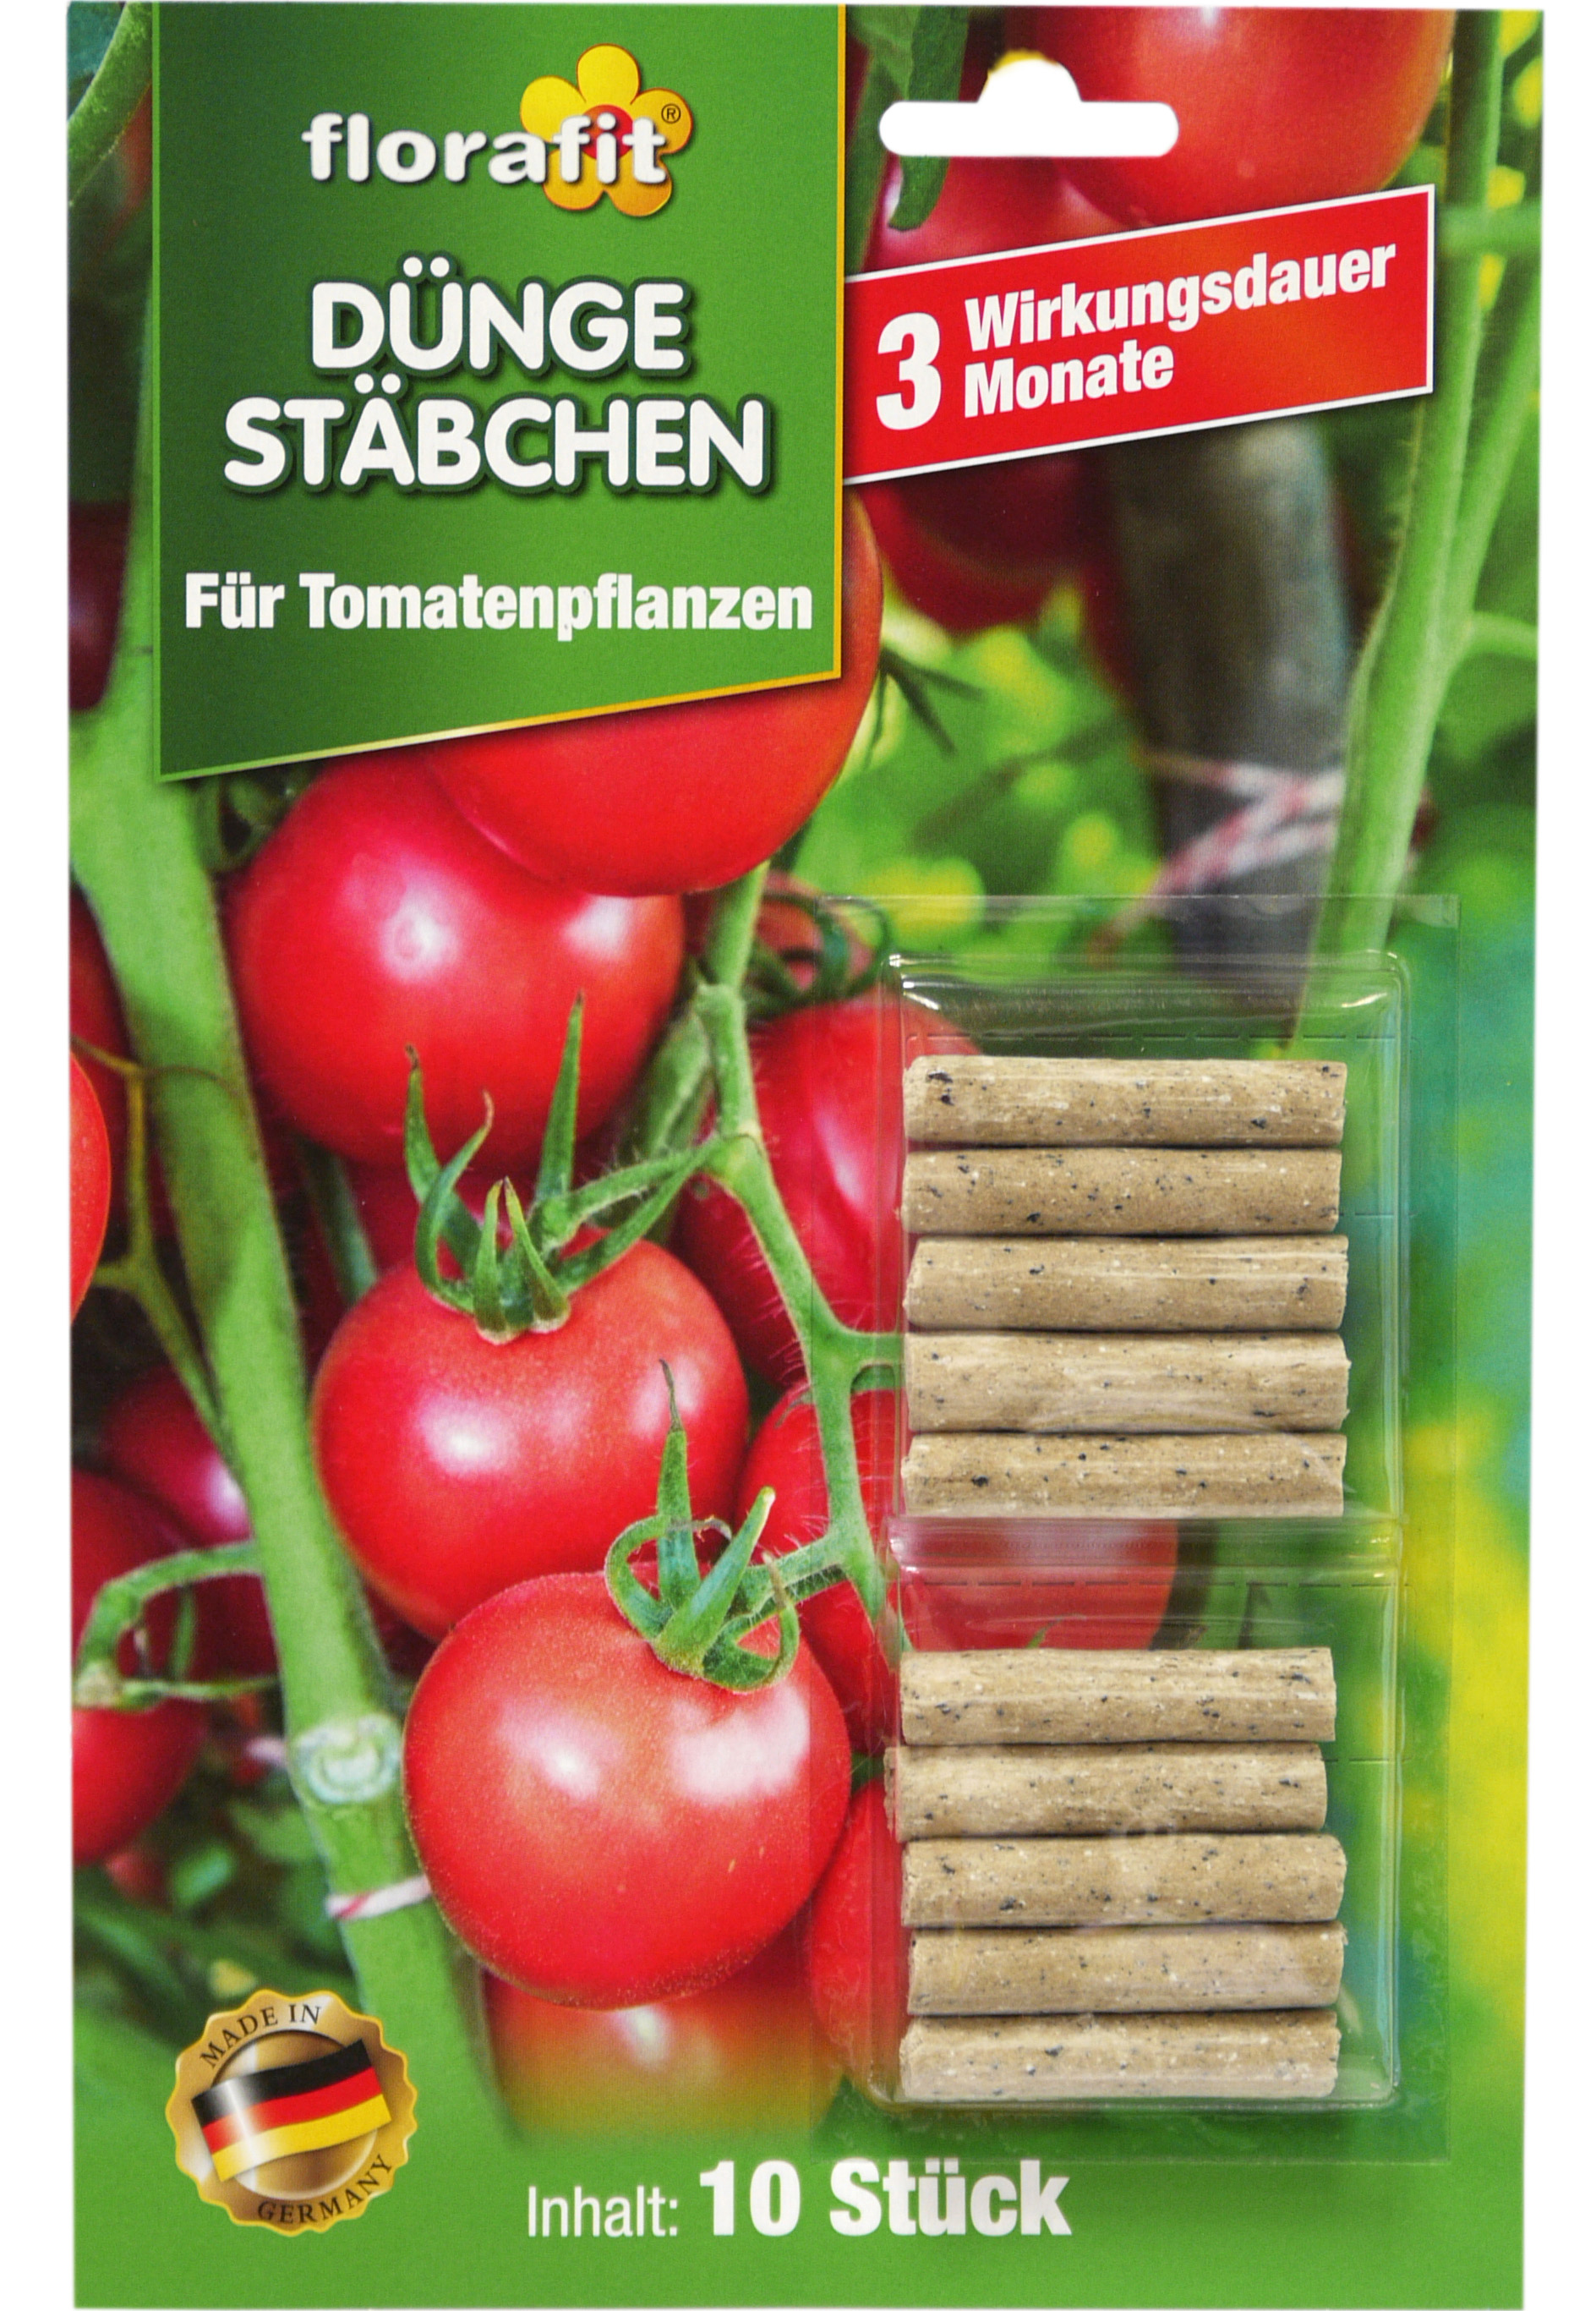 02245 - fertilizer sticks for tomatoes, 10 pcs blistered